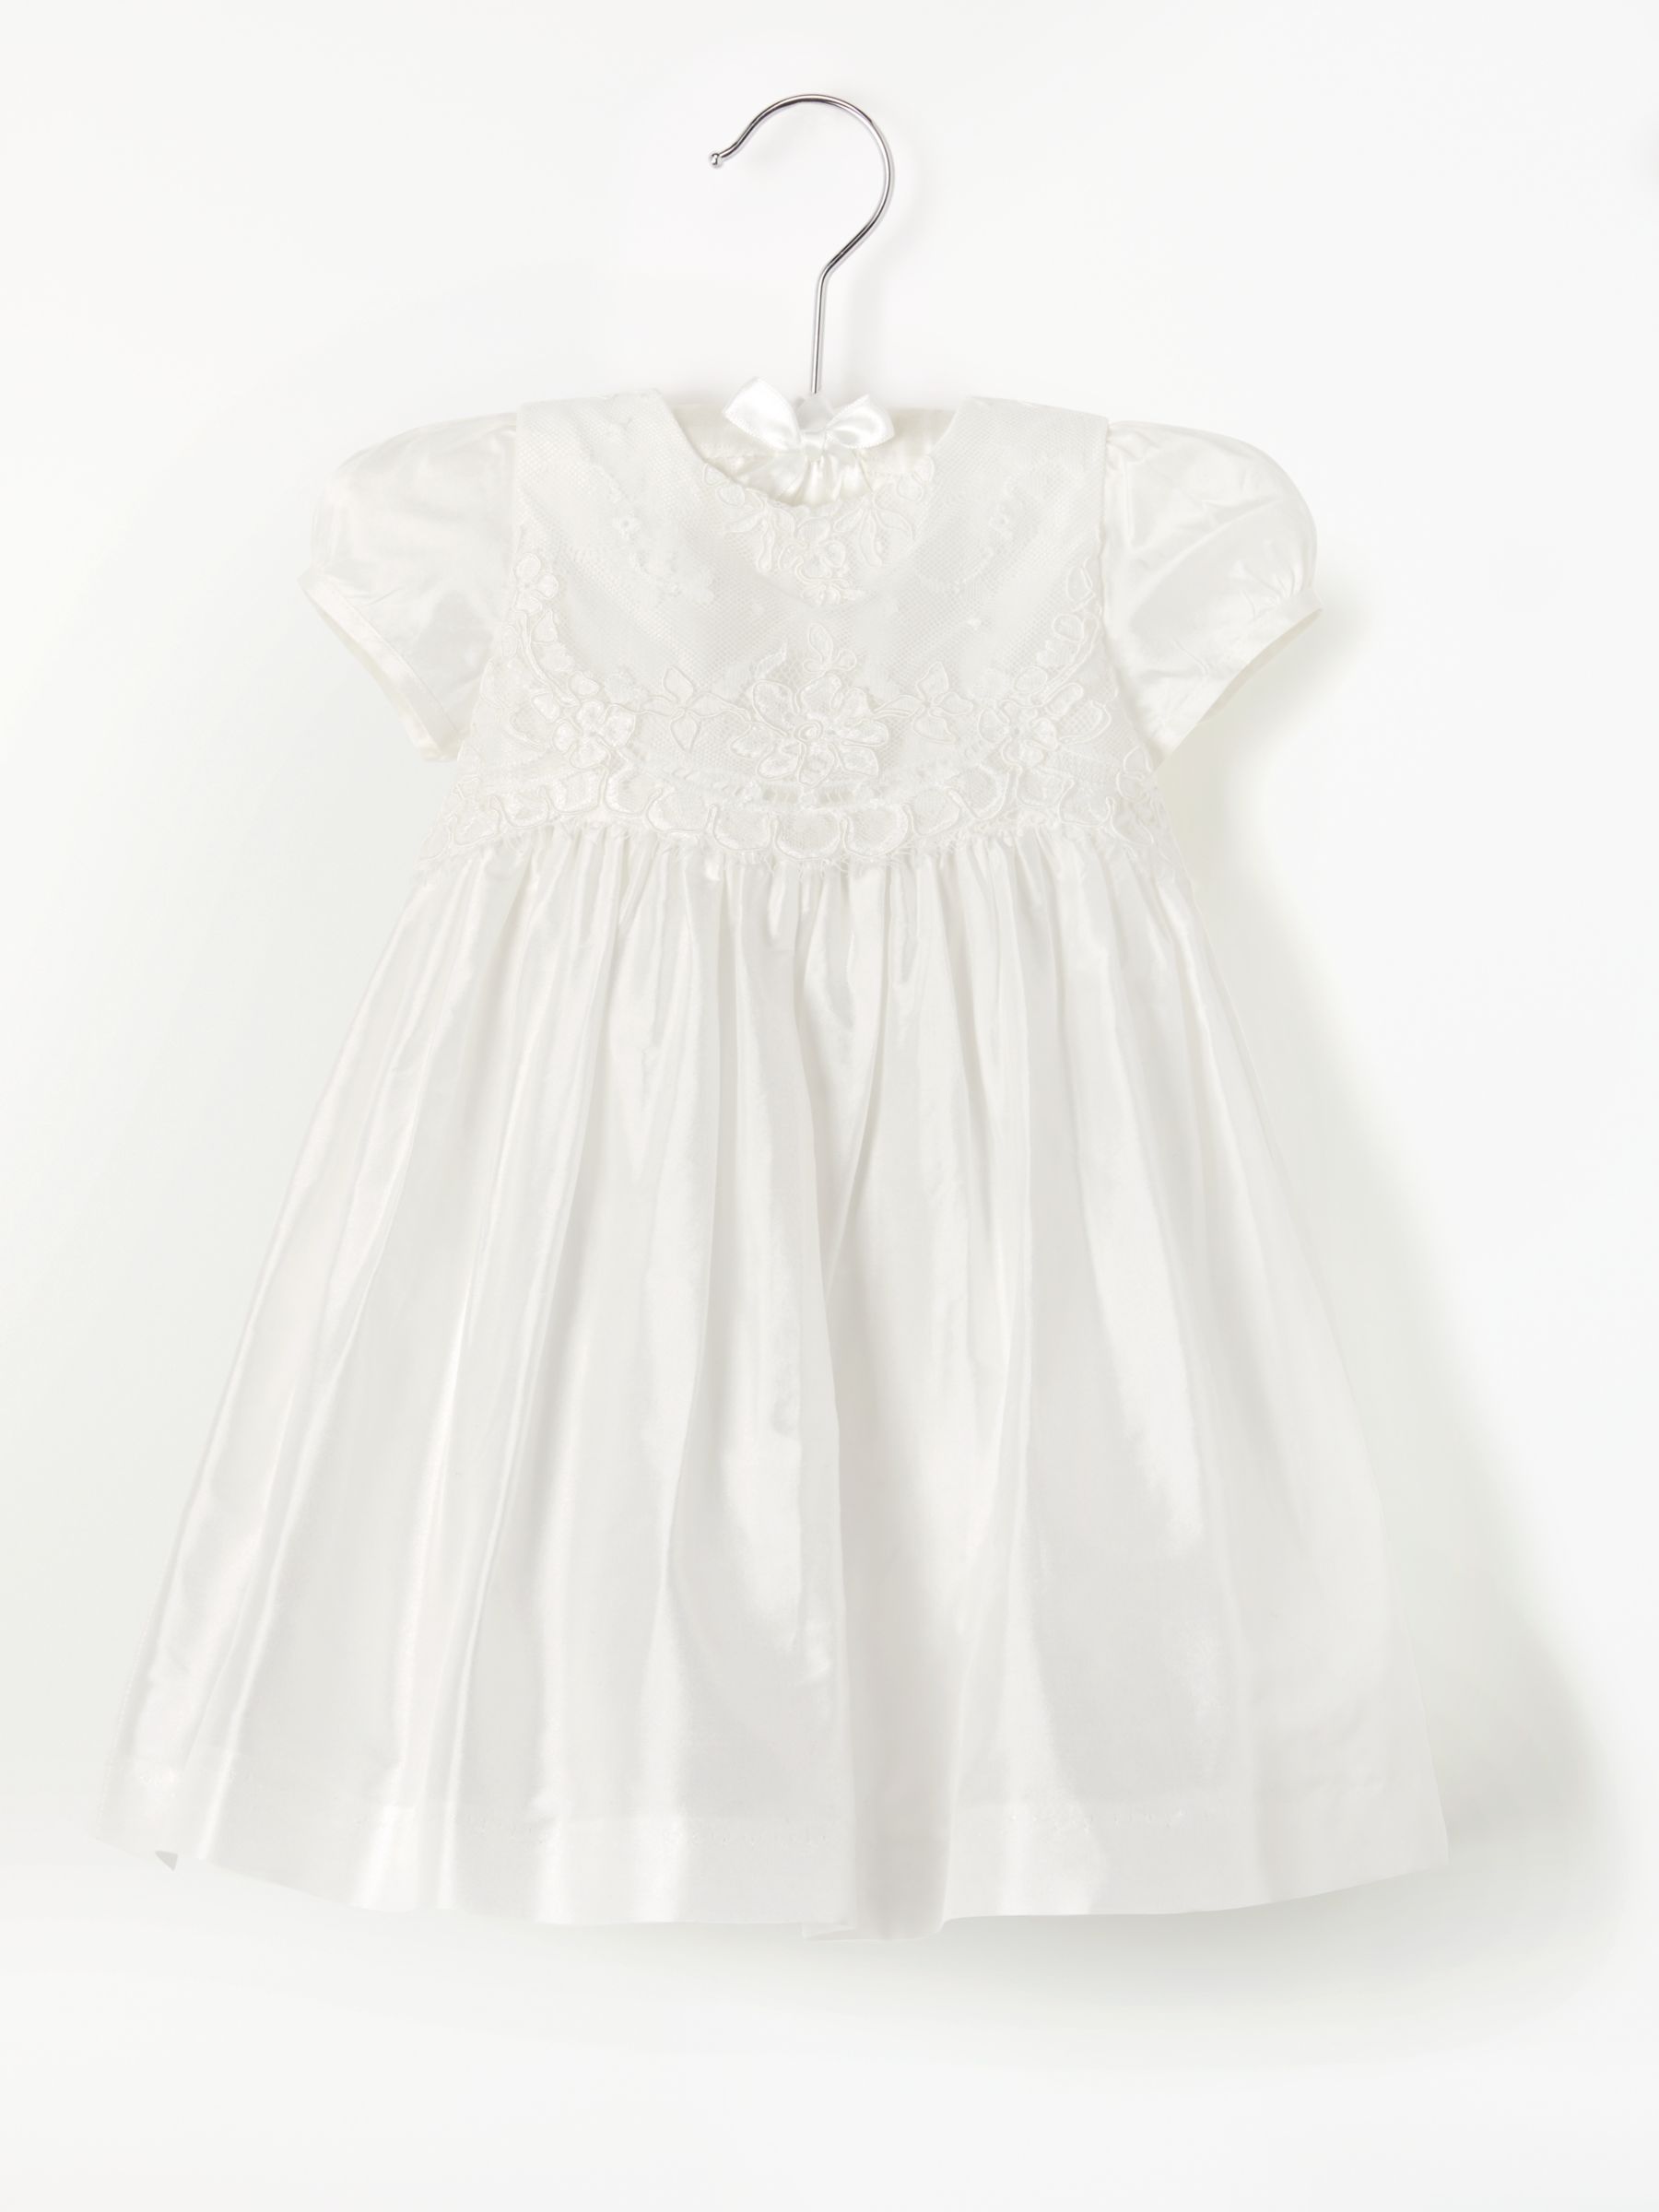 Baby Dresses | Baby Skirts | John Lewis & Partners